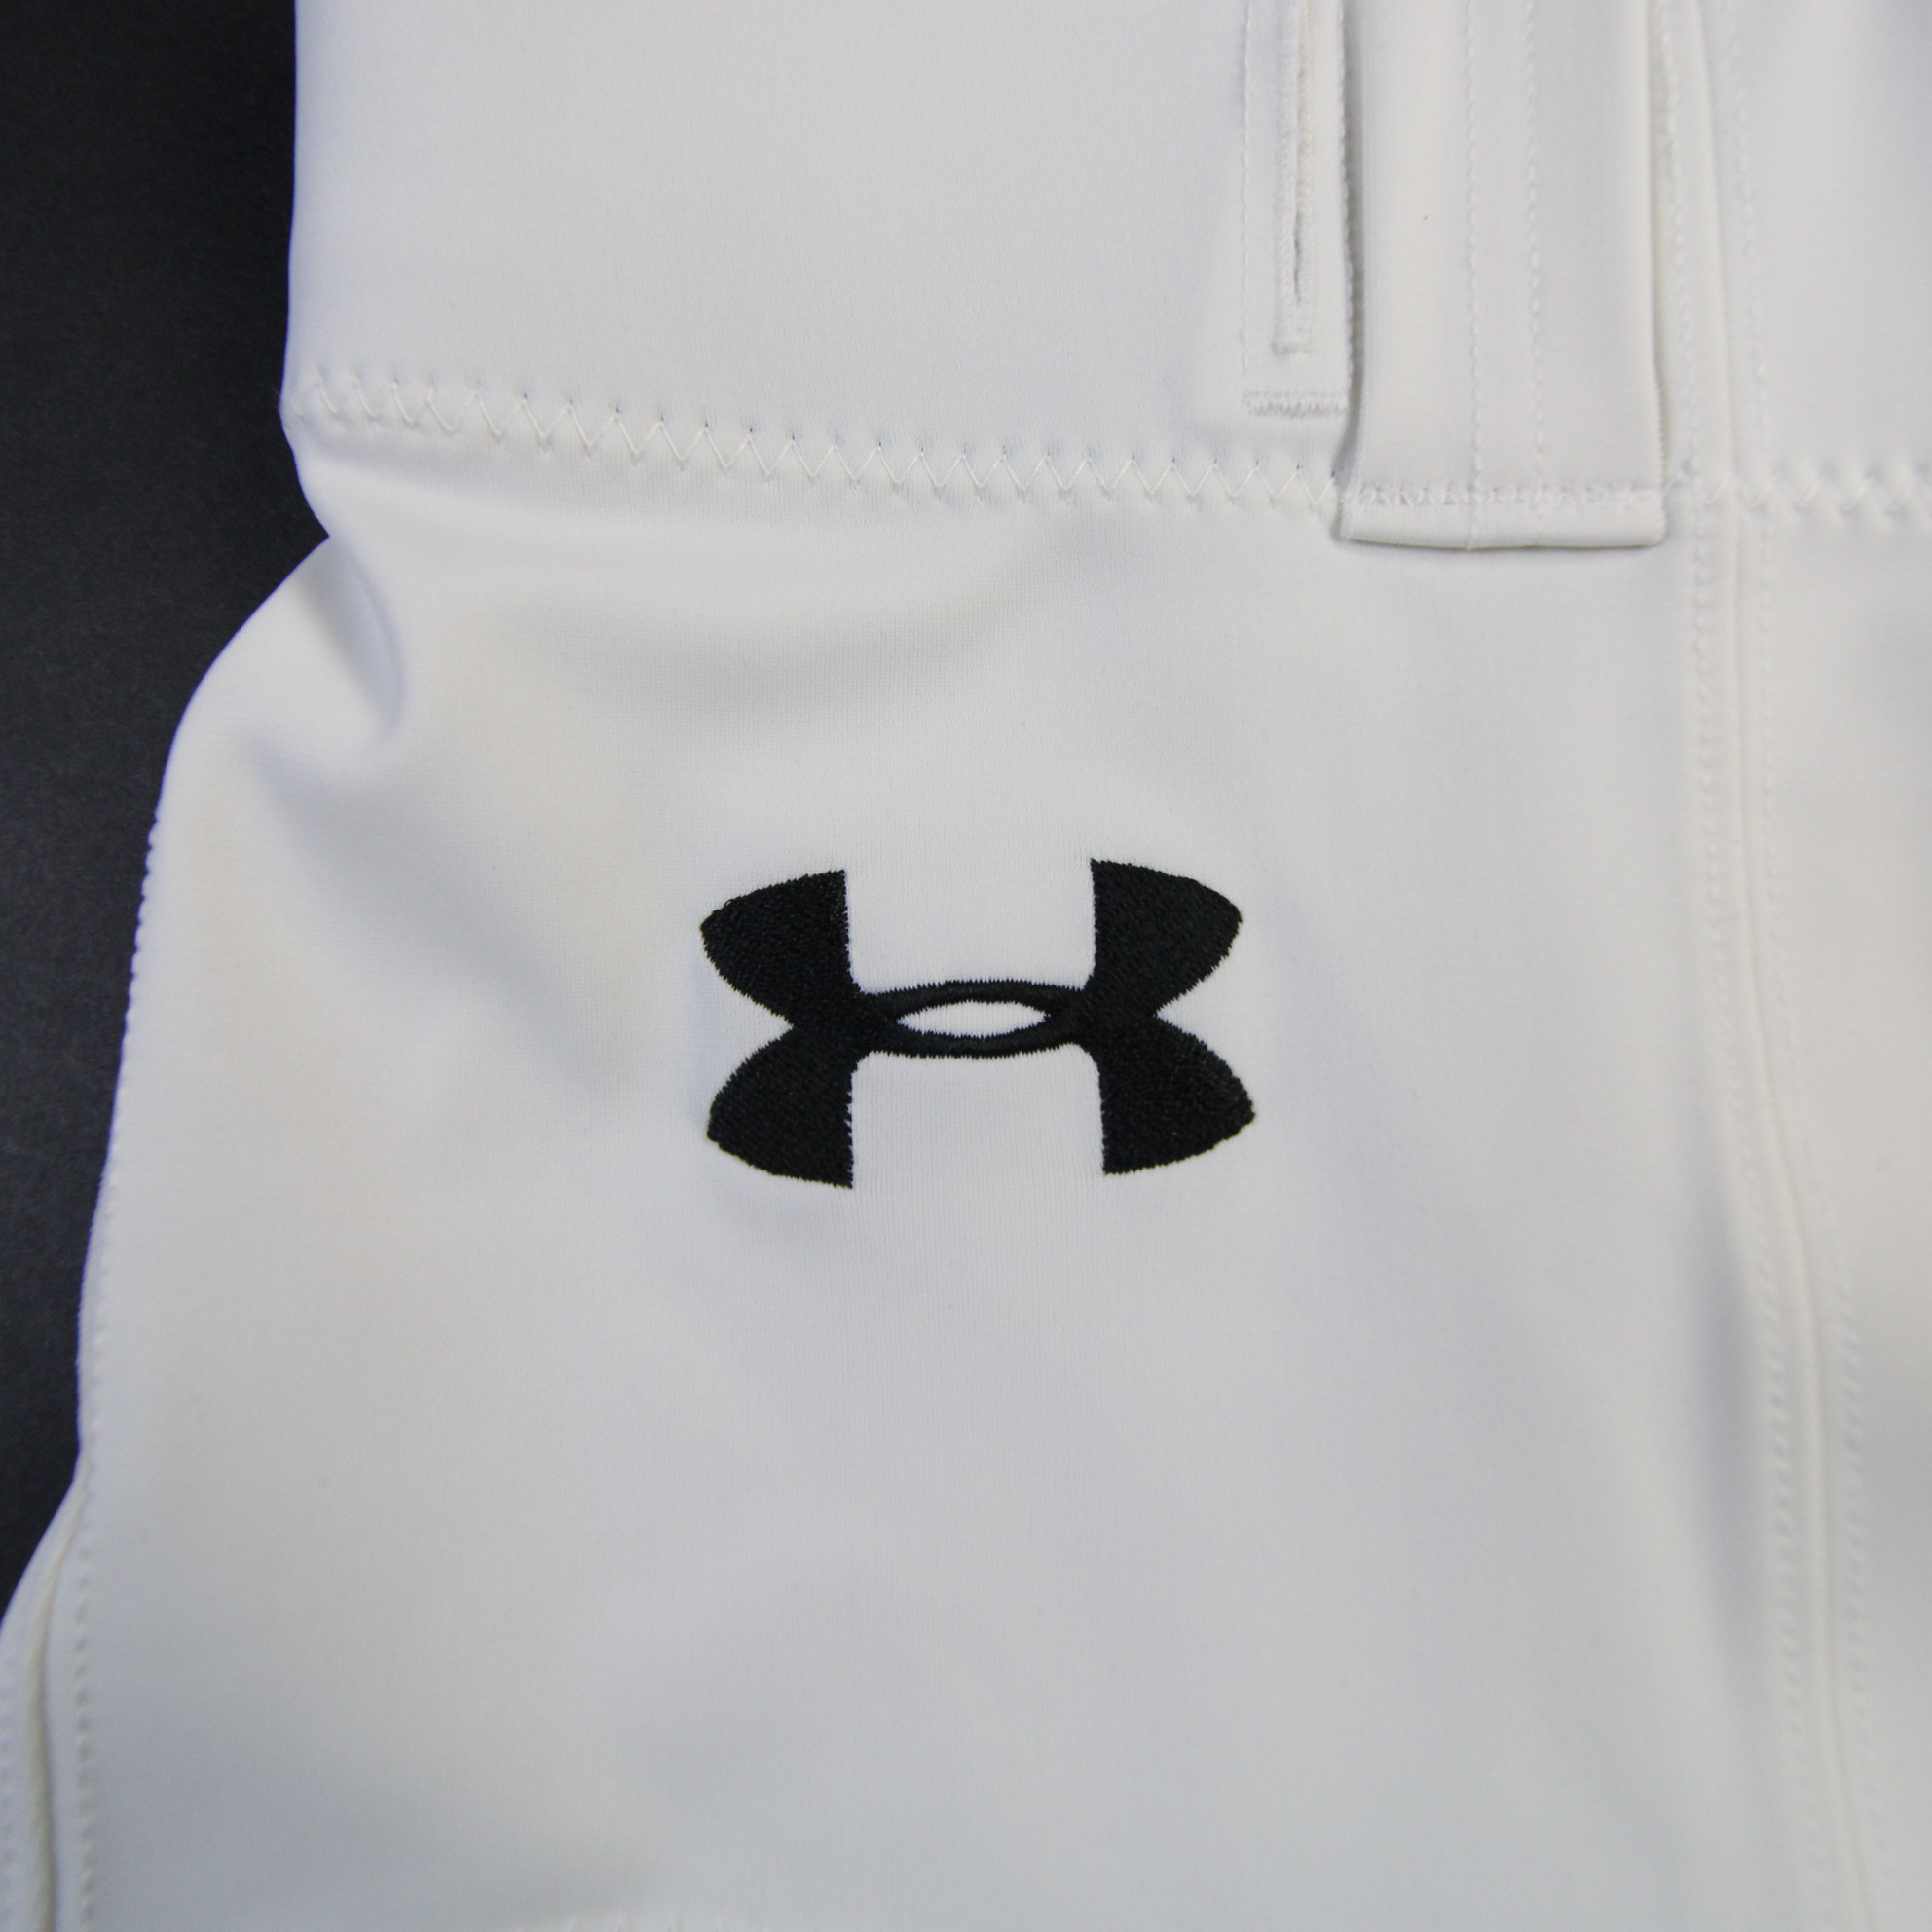 Under Armour Football Pants Men's S M L XL 2XL White Black Logo New ...